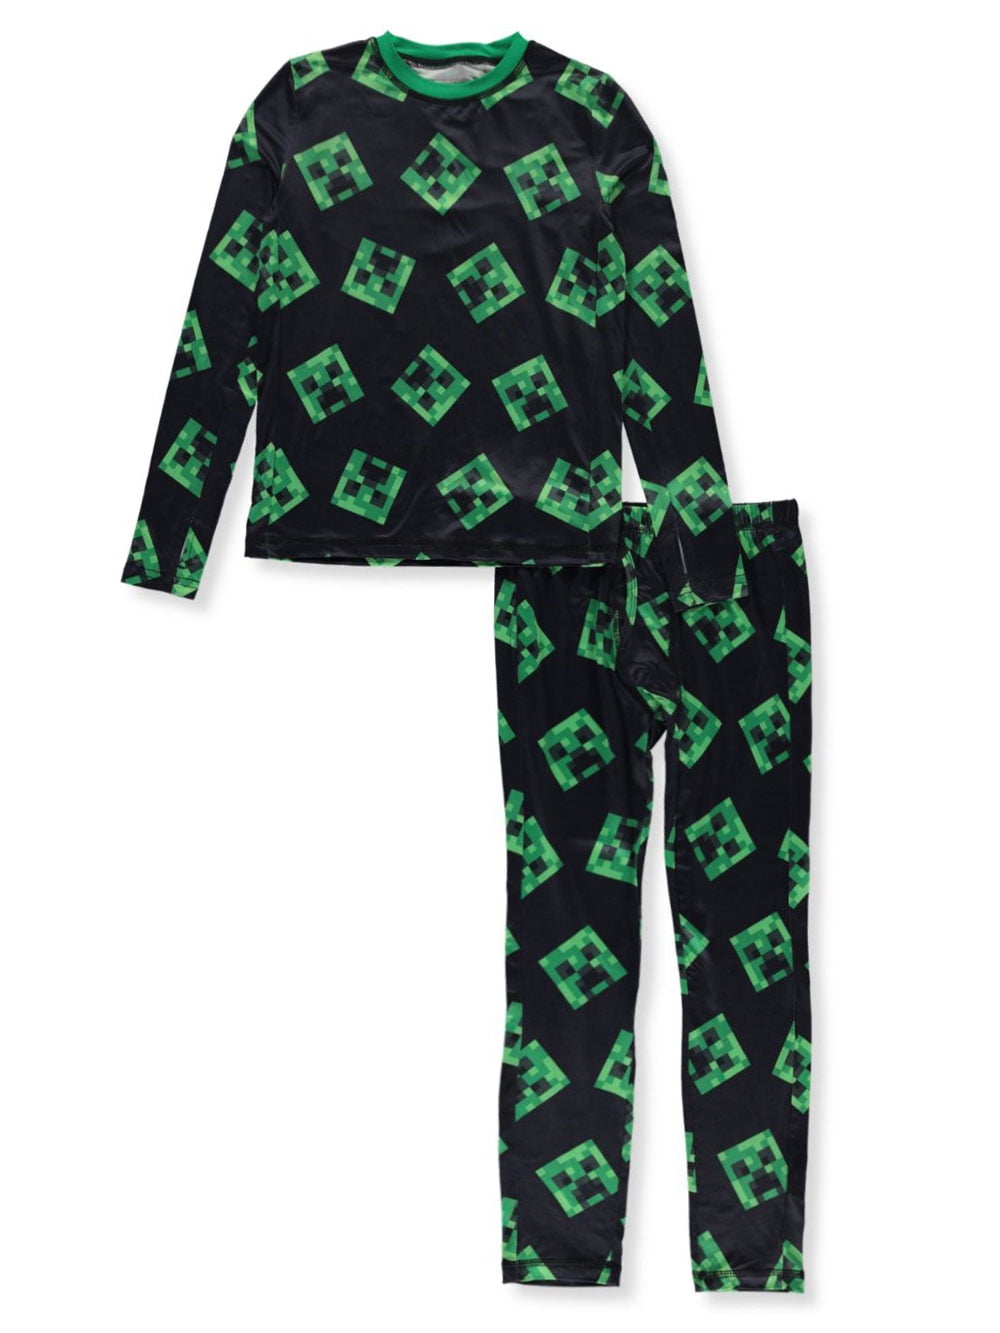 Boys Minecraft Pajamas Blue & Gray Charged Creeper Sleep Set Top & Pants